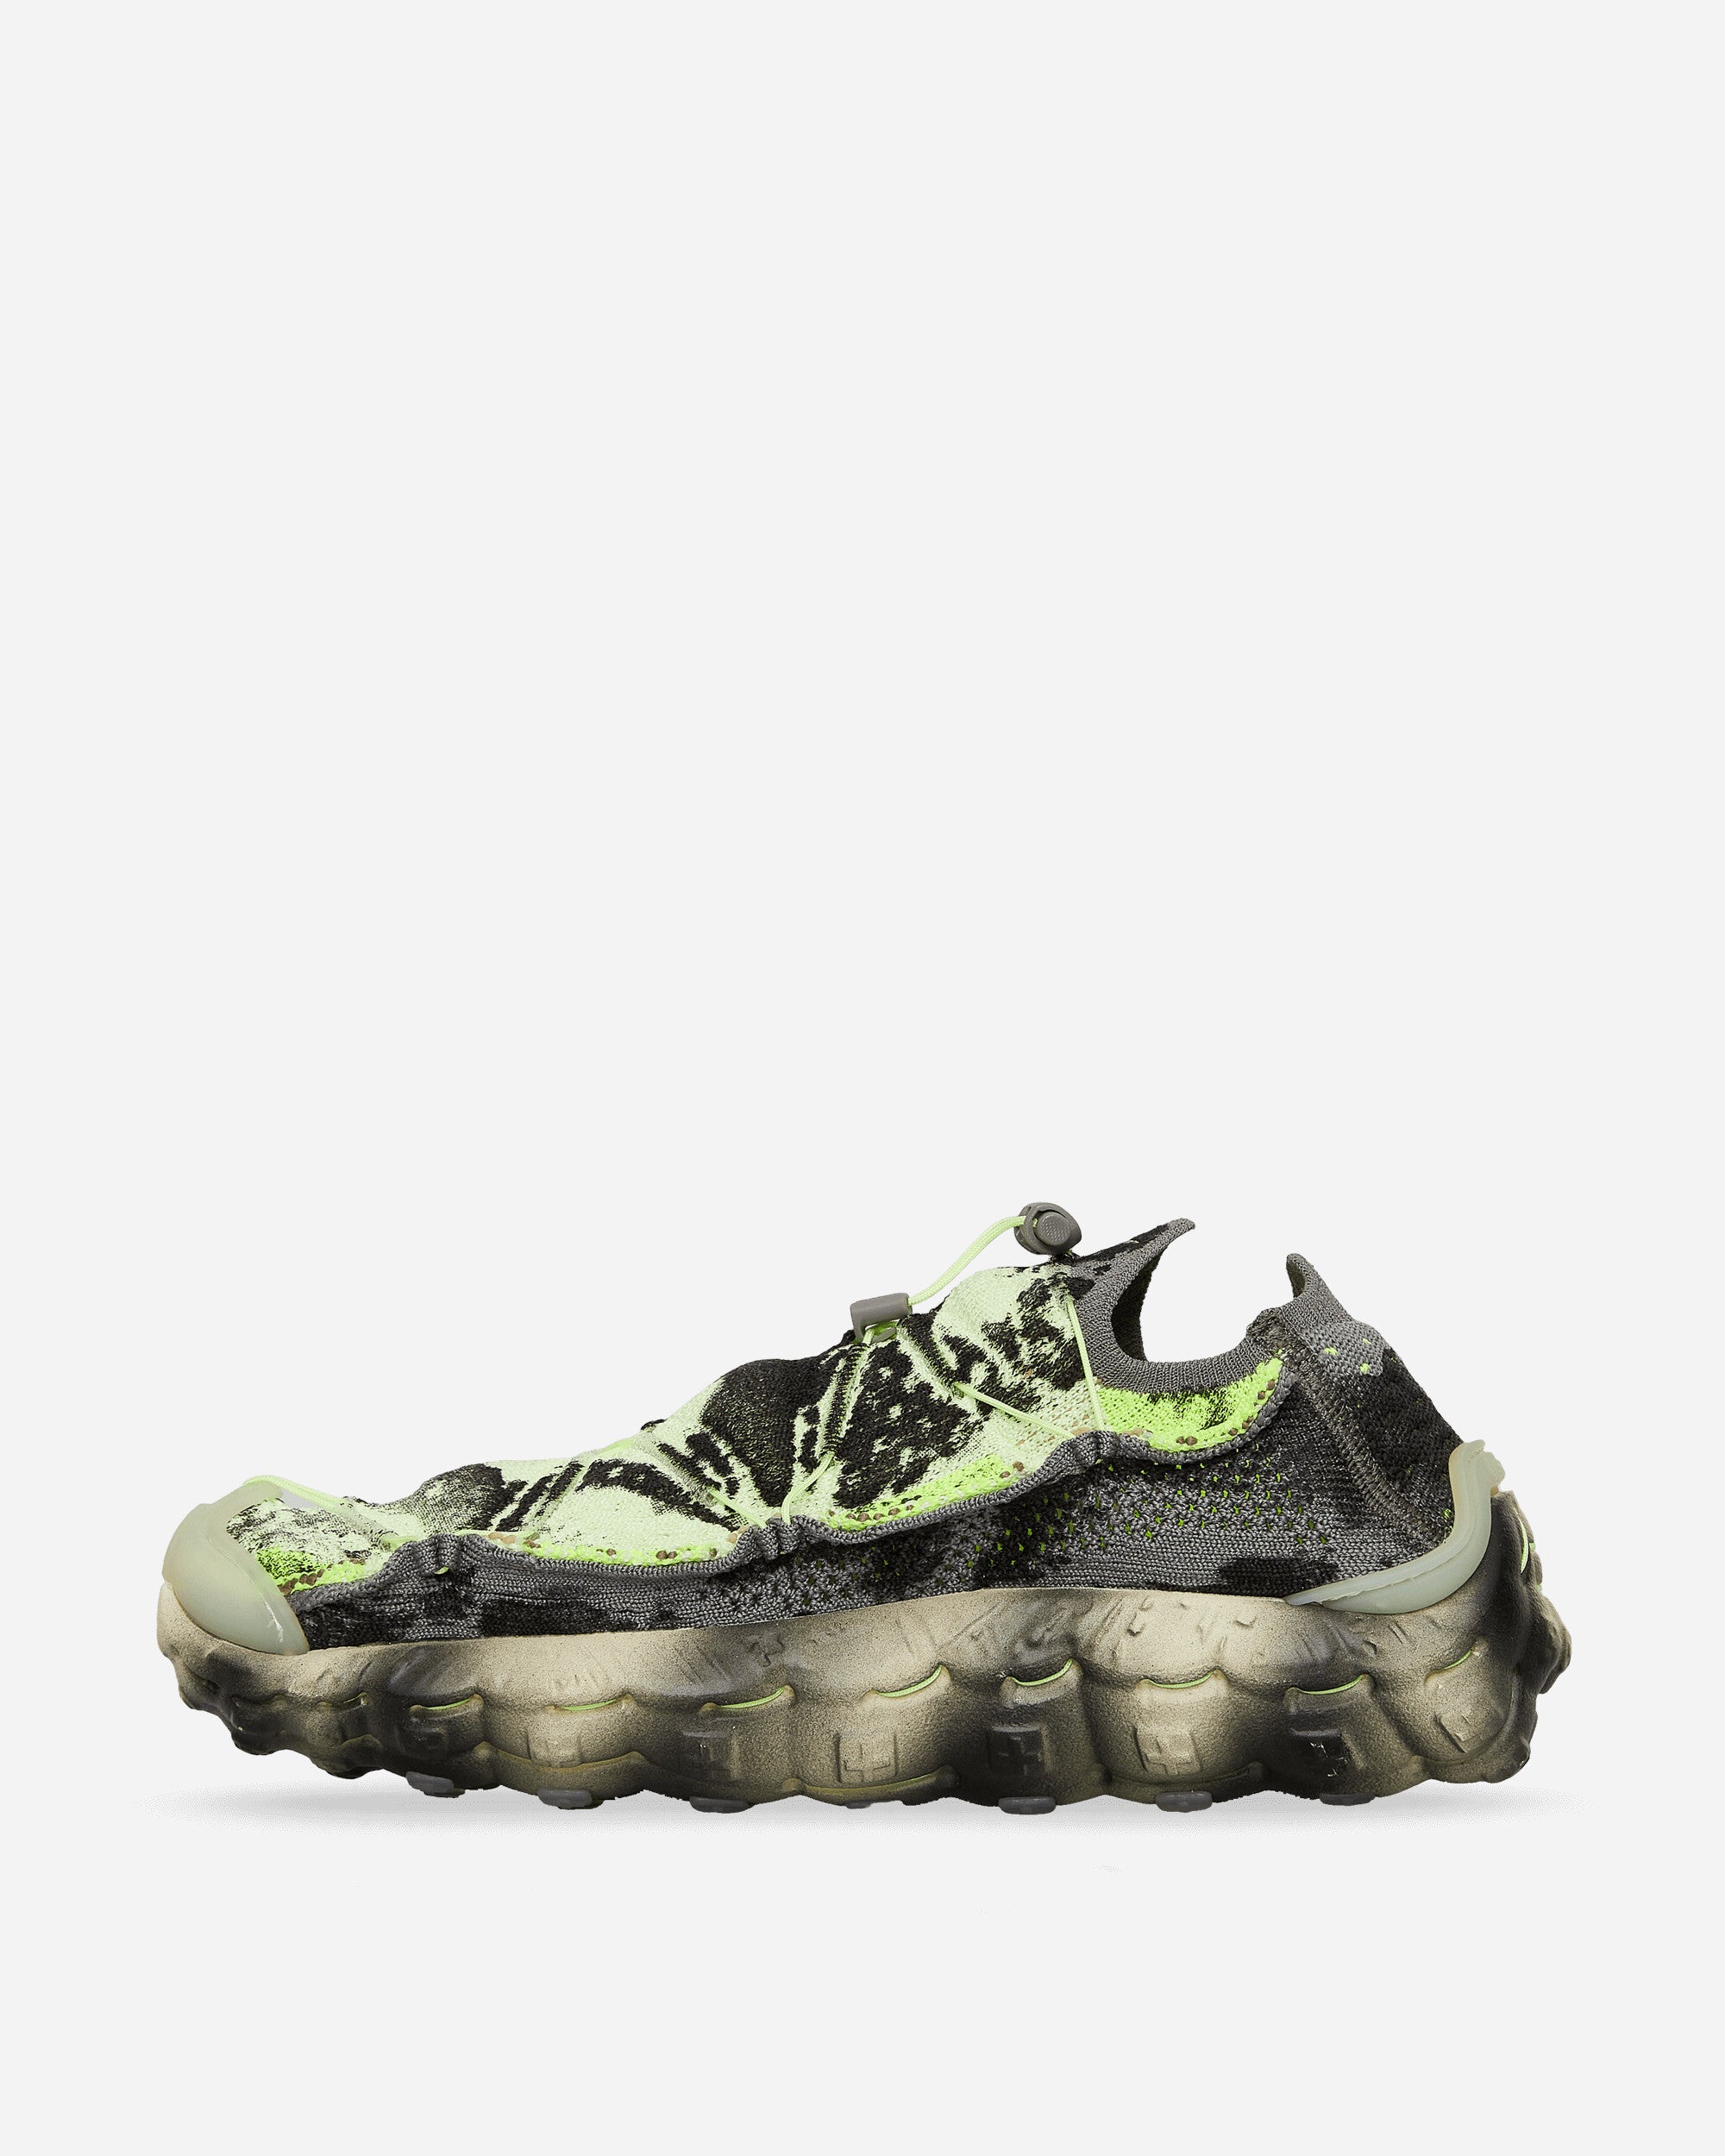 Nike Ispa Mindbody Barely Volt/Plum Fog-Volt Sneakers Low DH7546-700